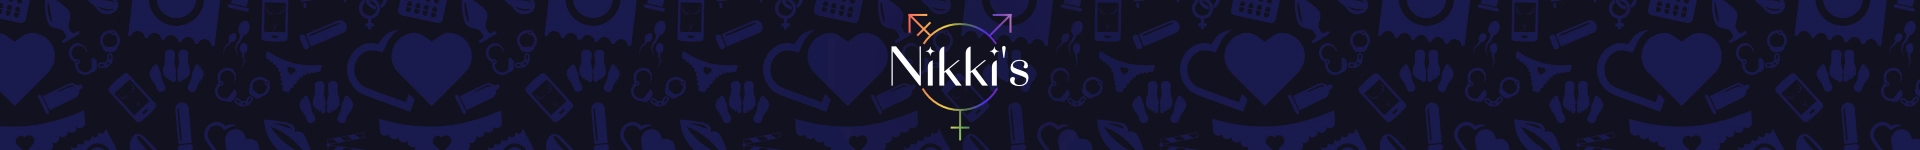 Nikki's Eroticss achtergrond